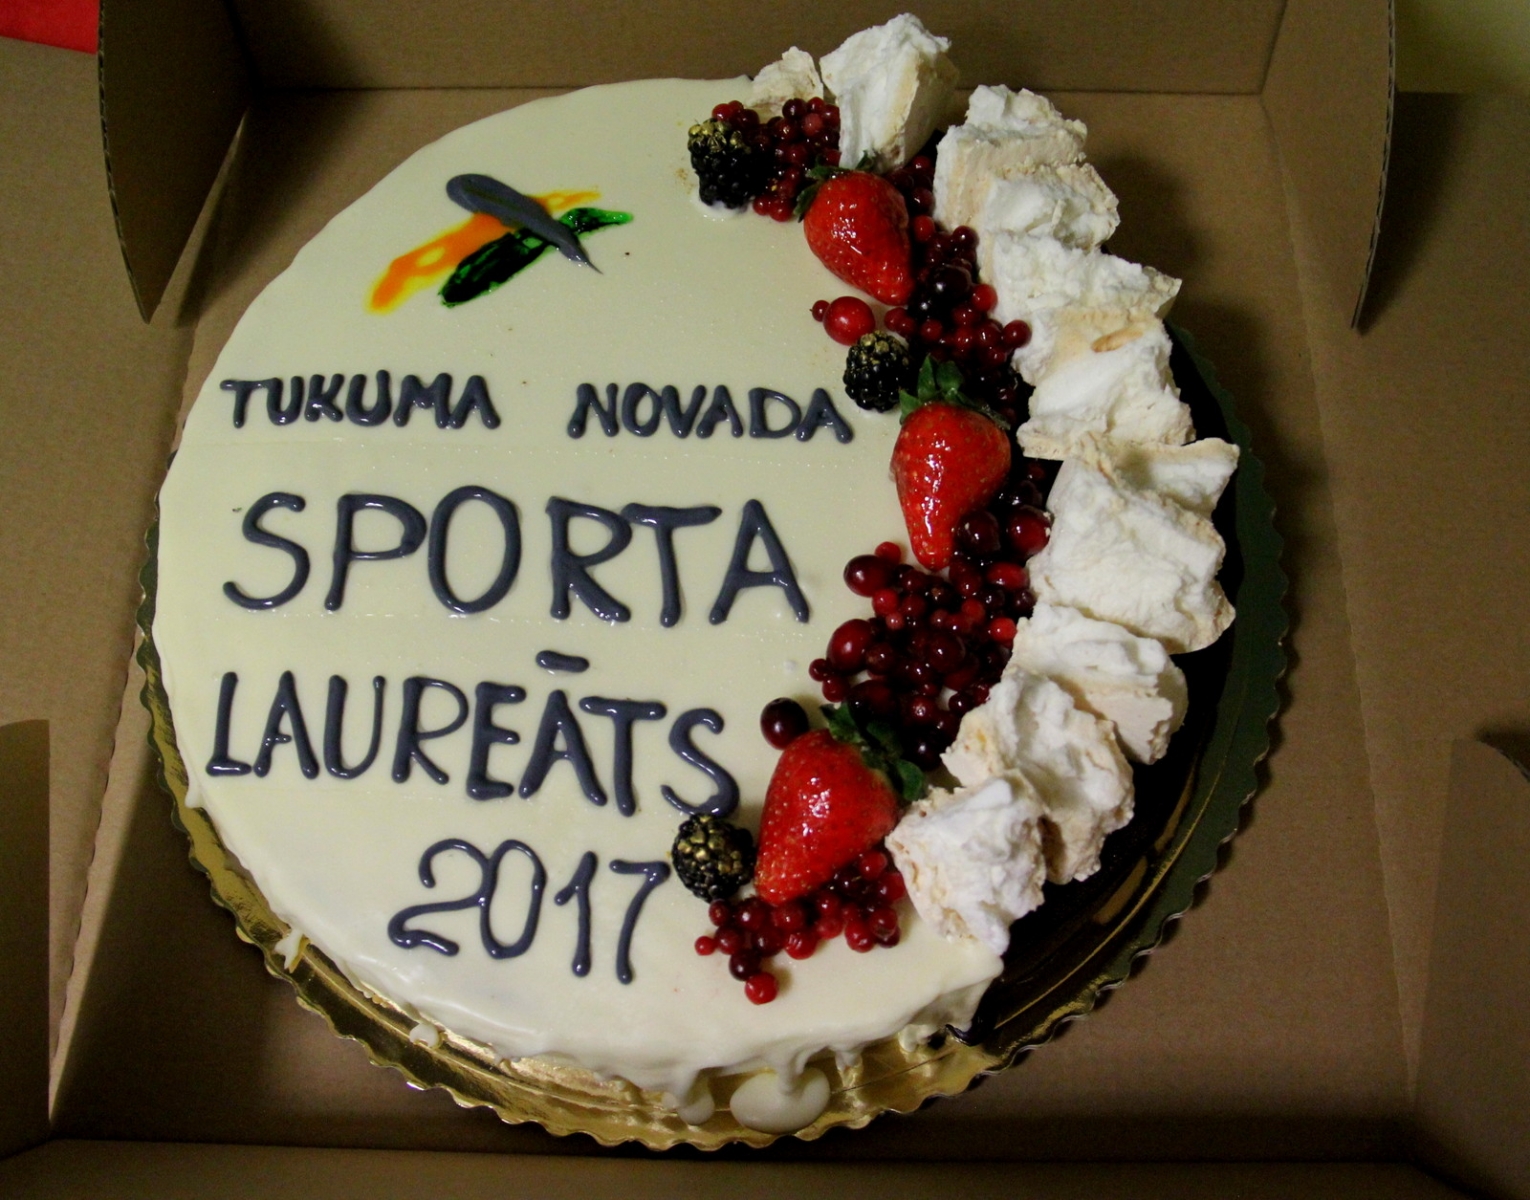 Tukuma novada Sporta laureāts 2017